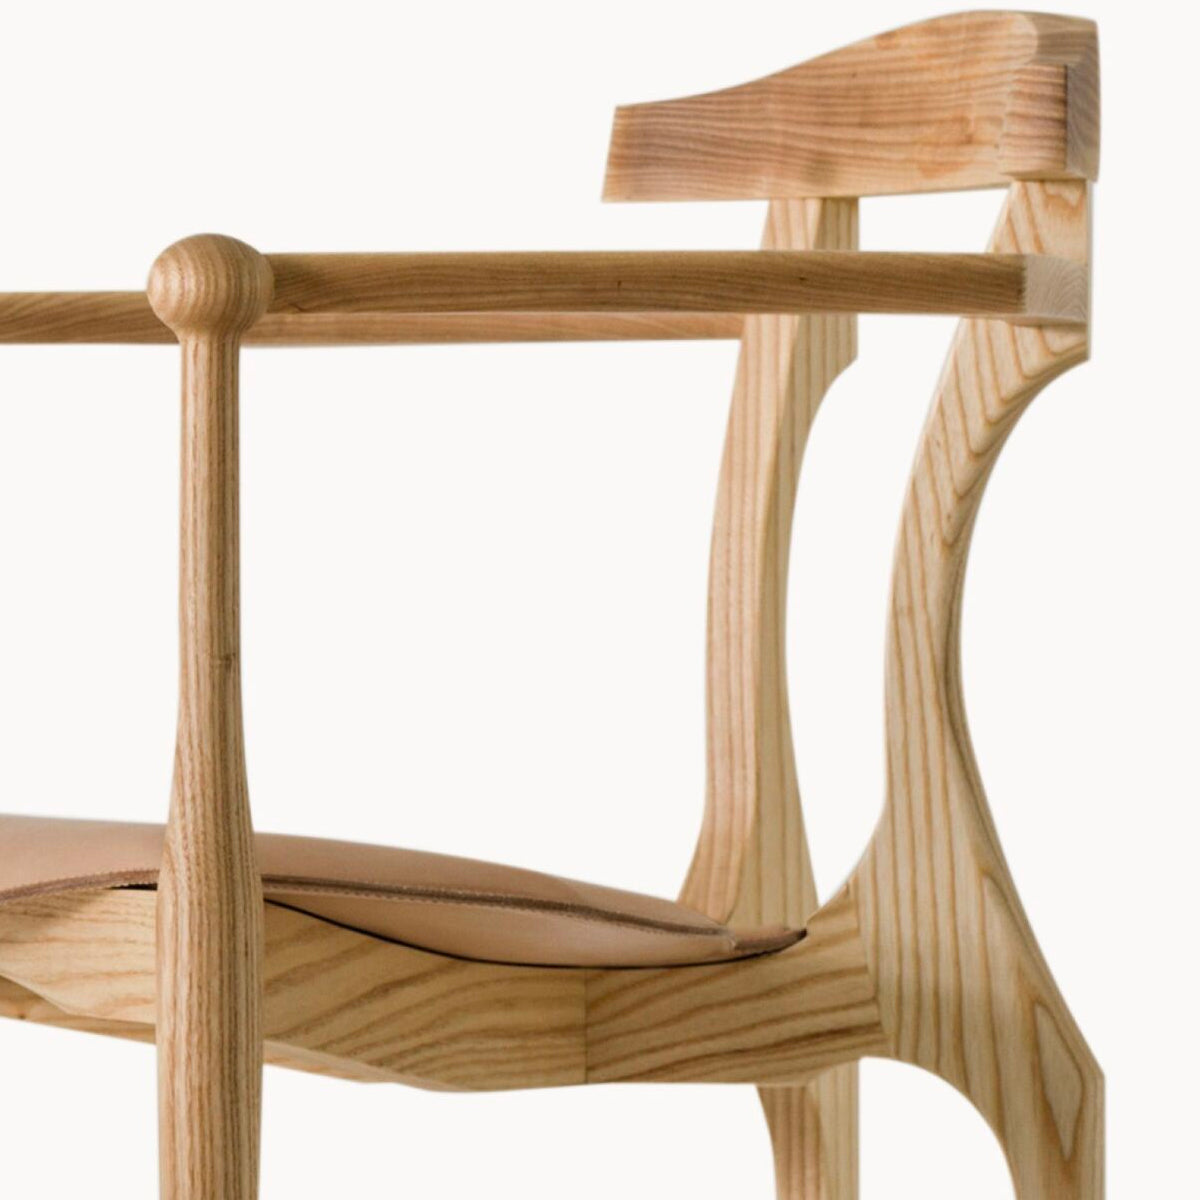 Gaulino Easy Chair by BD Barcelona Design | Do Shop